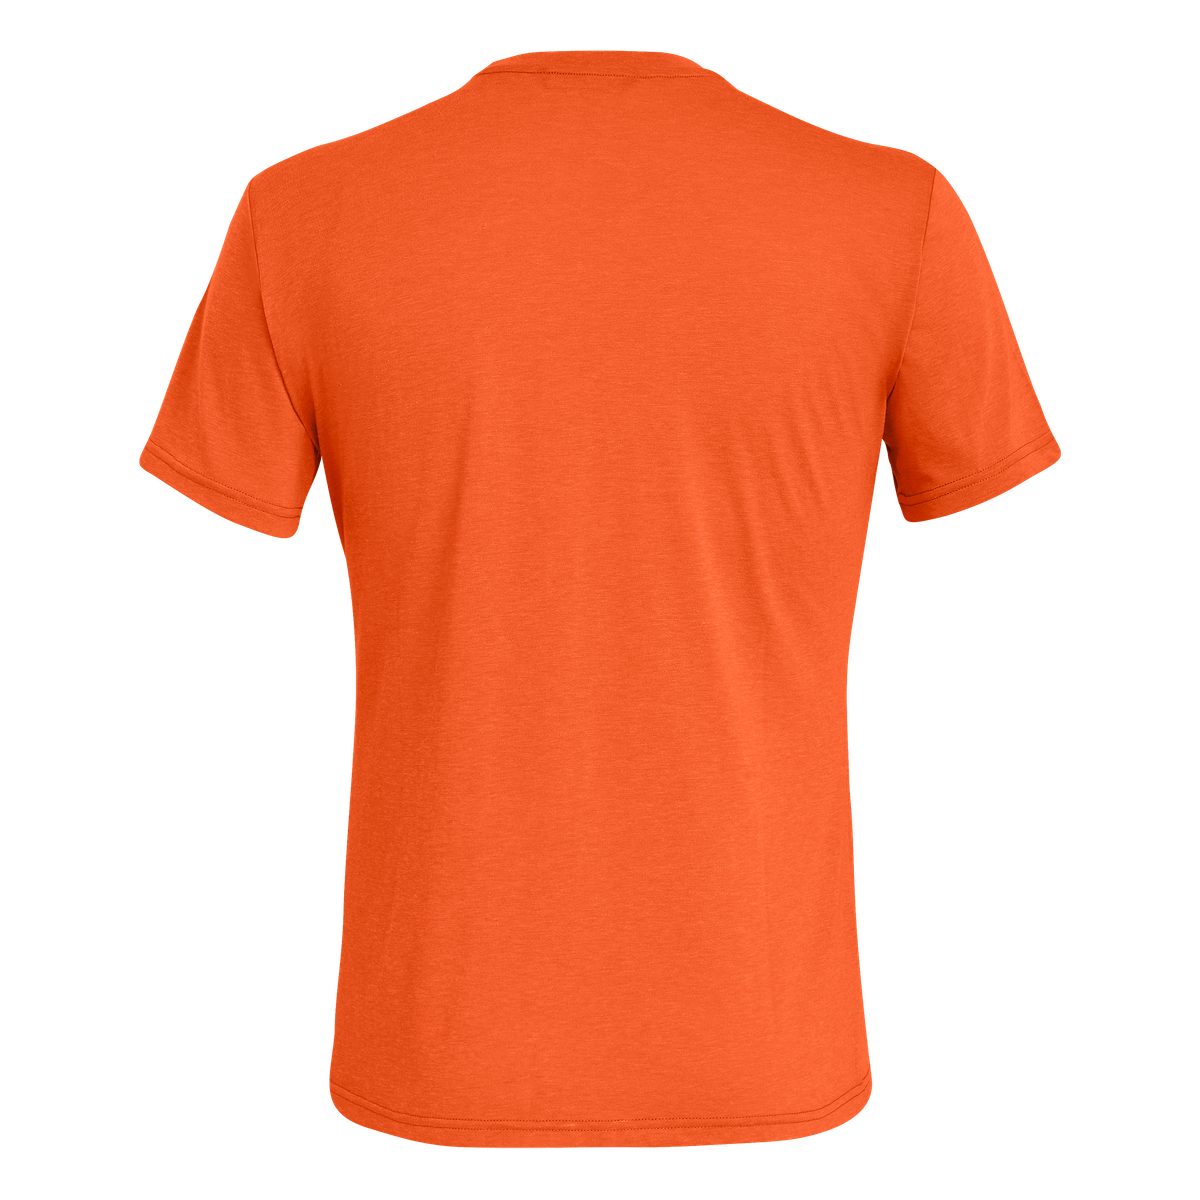 Solidlogo Salewa 4156 red Salewa (Funktionsshirt) T-Shirt Dri-Release® T-Shirt Herren - orange